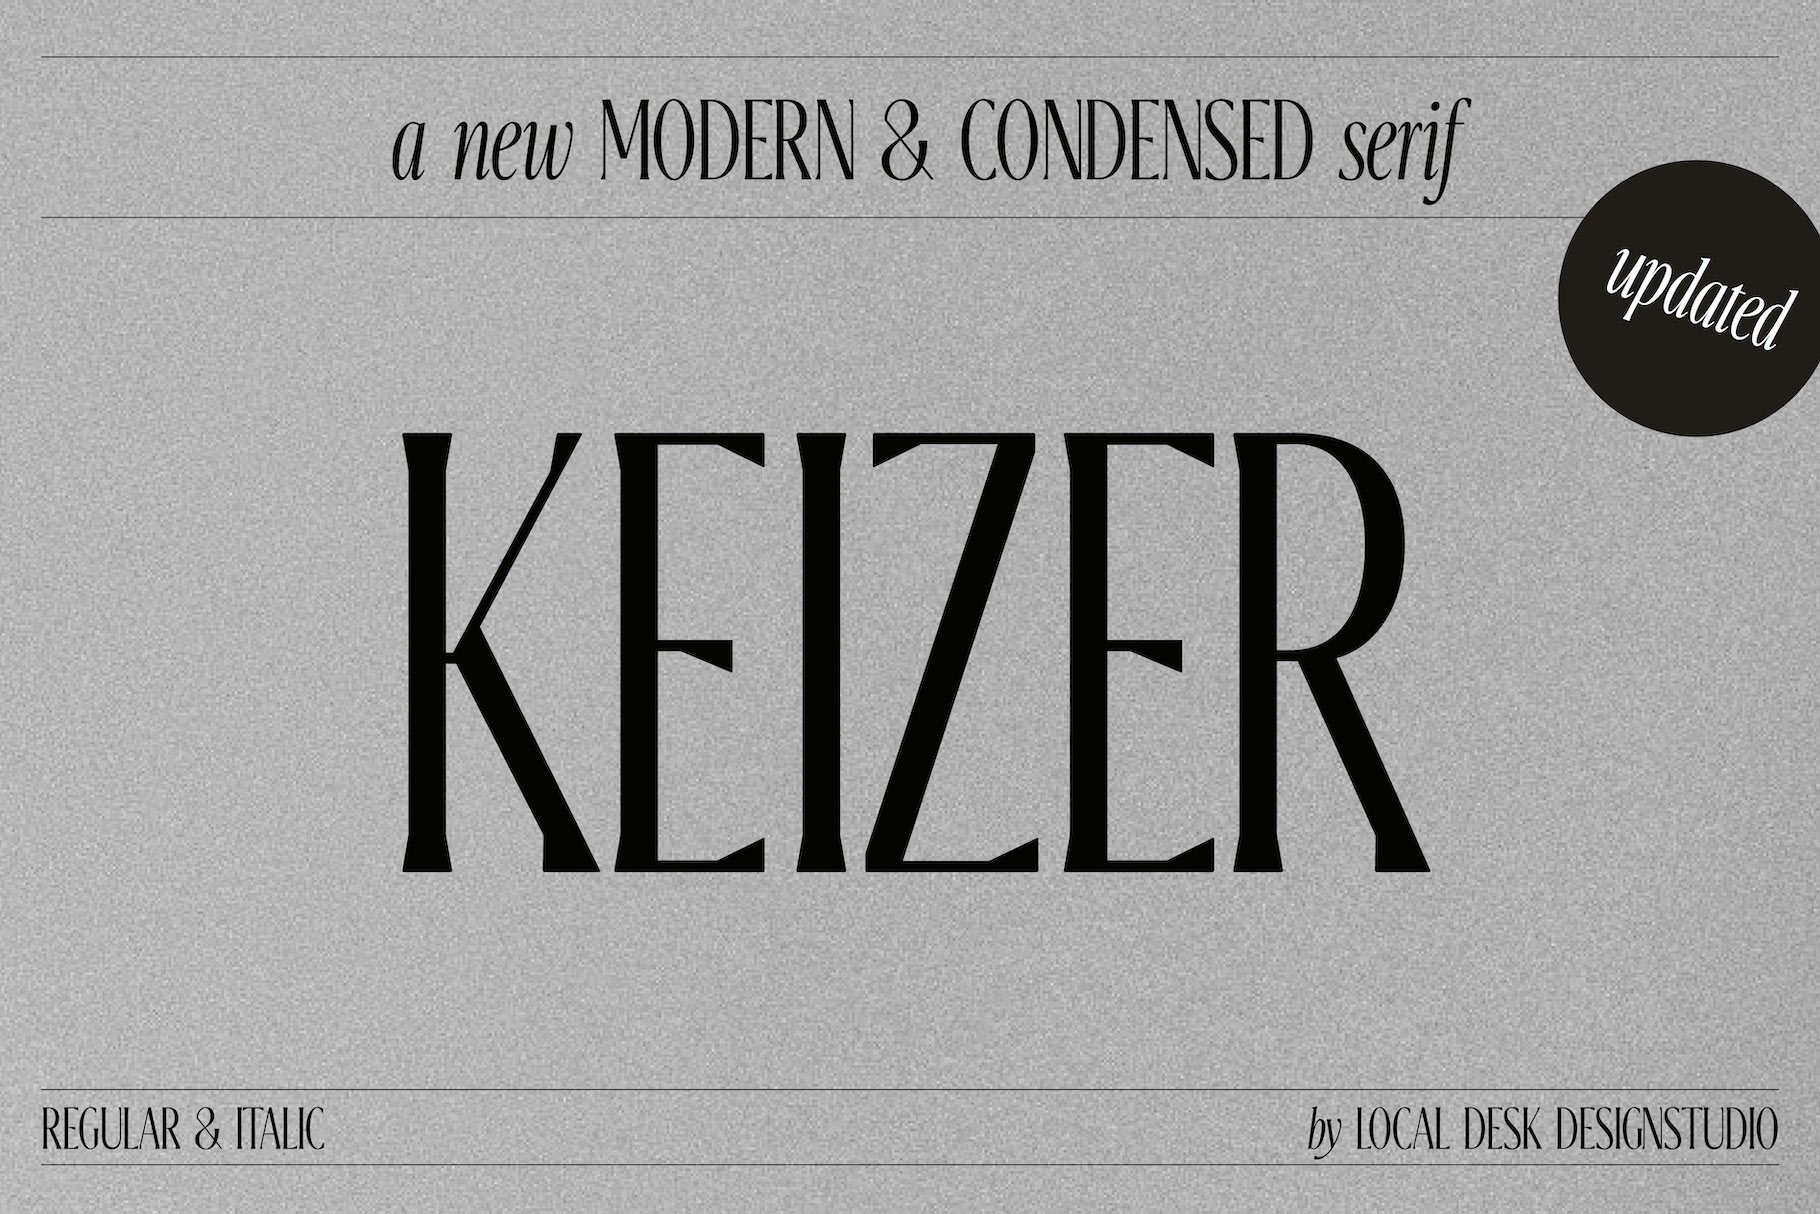 Keizer – Modern & Condensed Serif cover image.